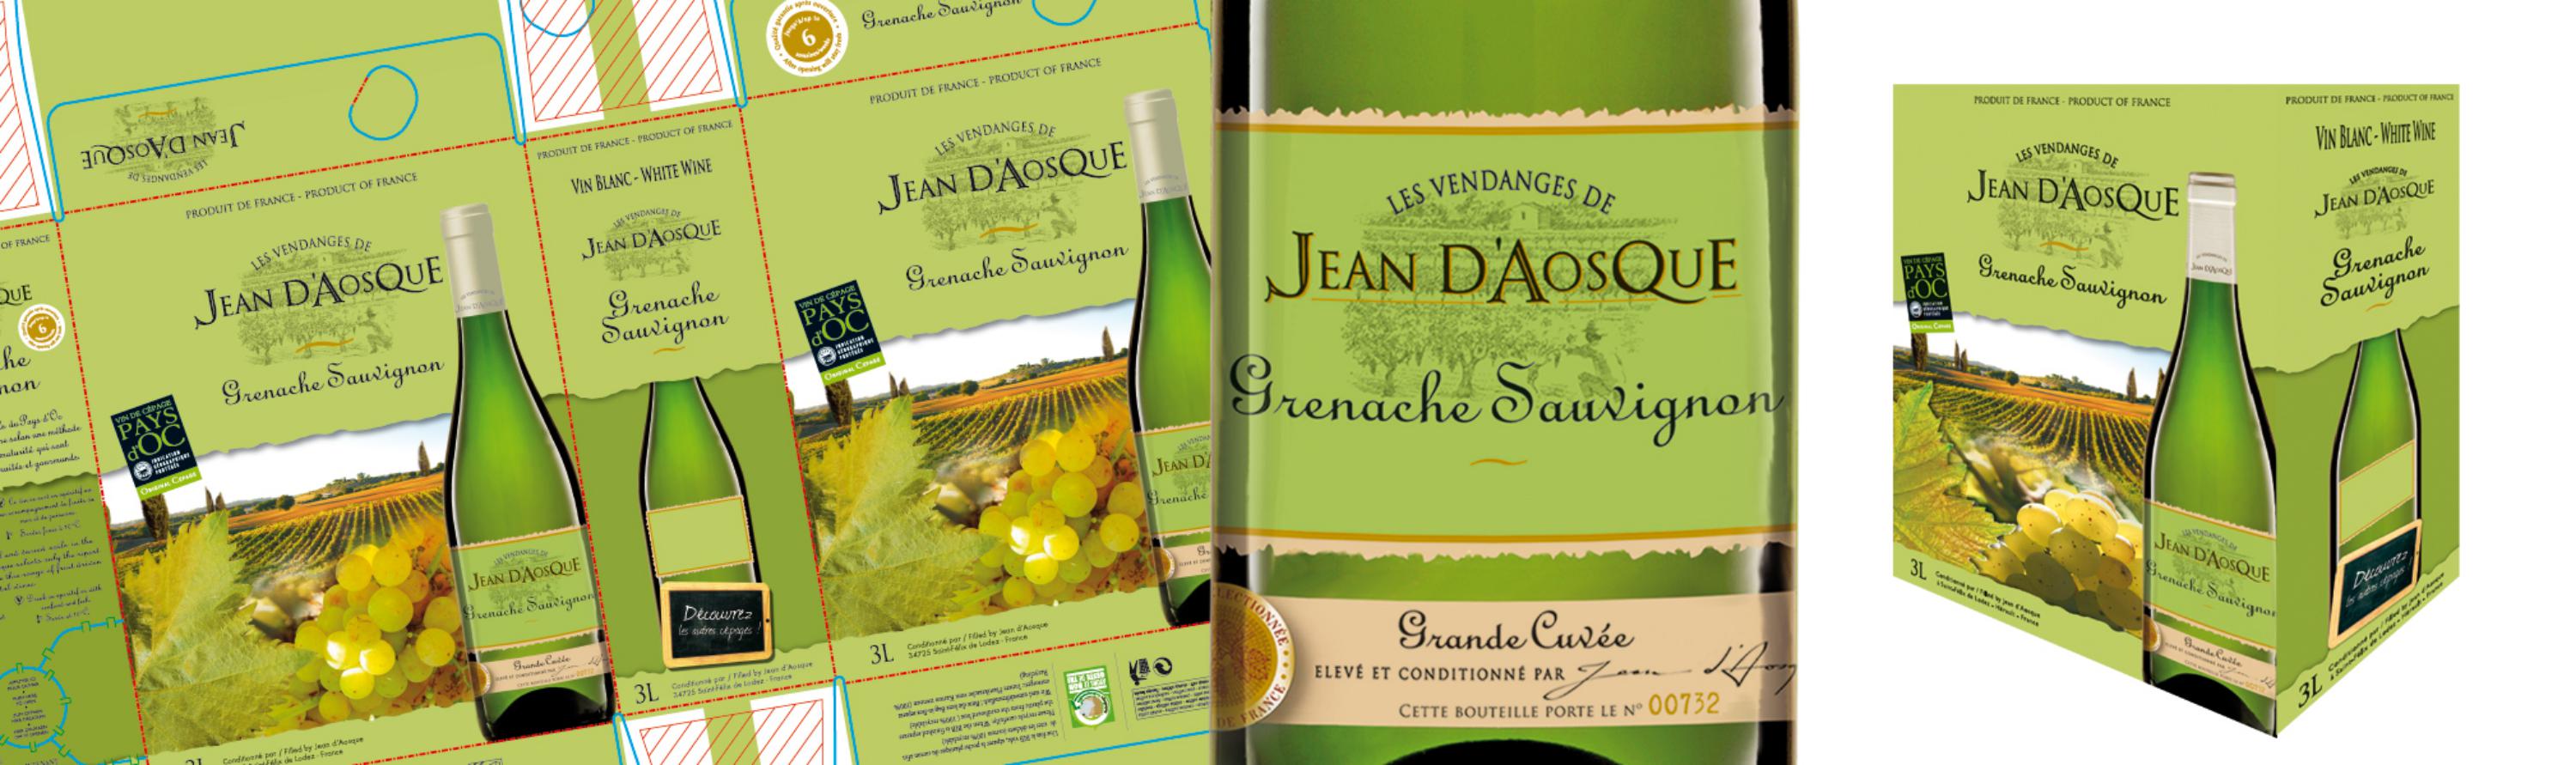 Bag-in-box Jean d'Aosque Grenache Sauvignon